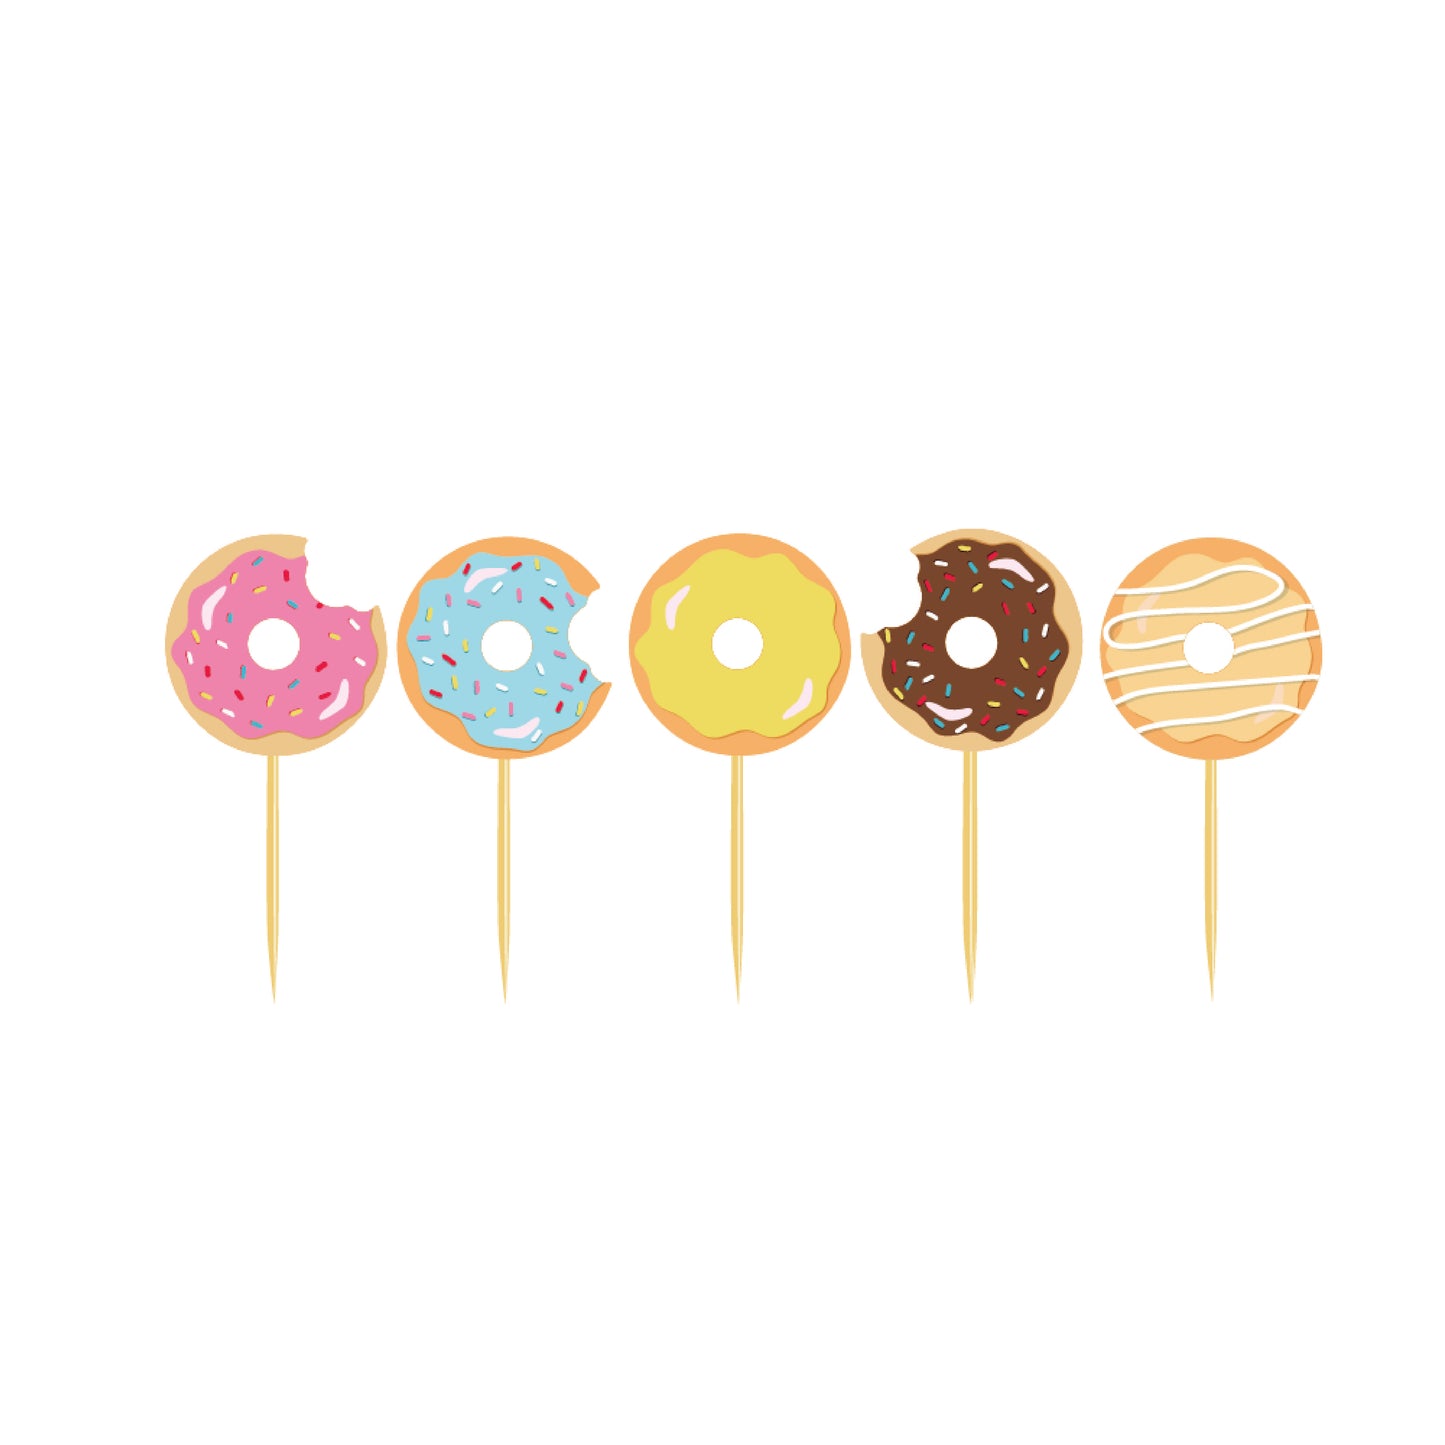 Emballages et décorations pour cupcakes Donut Happy Birthday, 20 pces